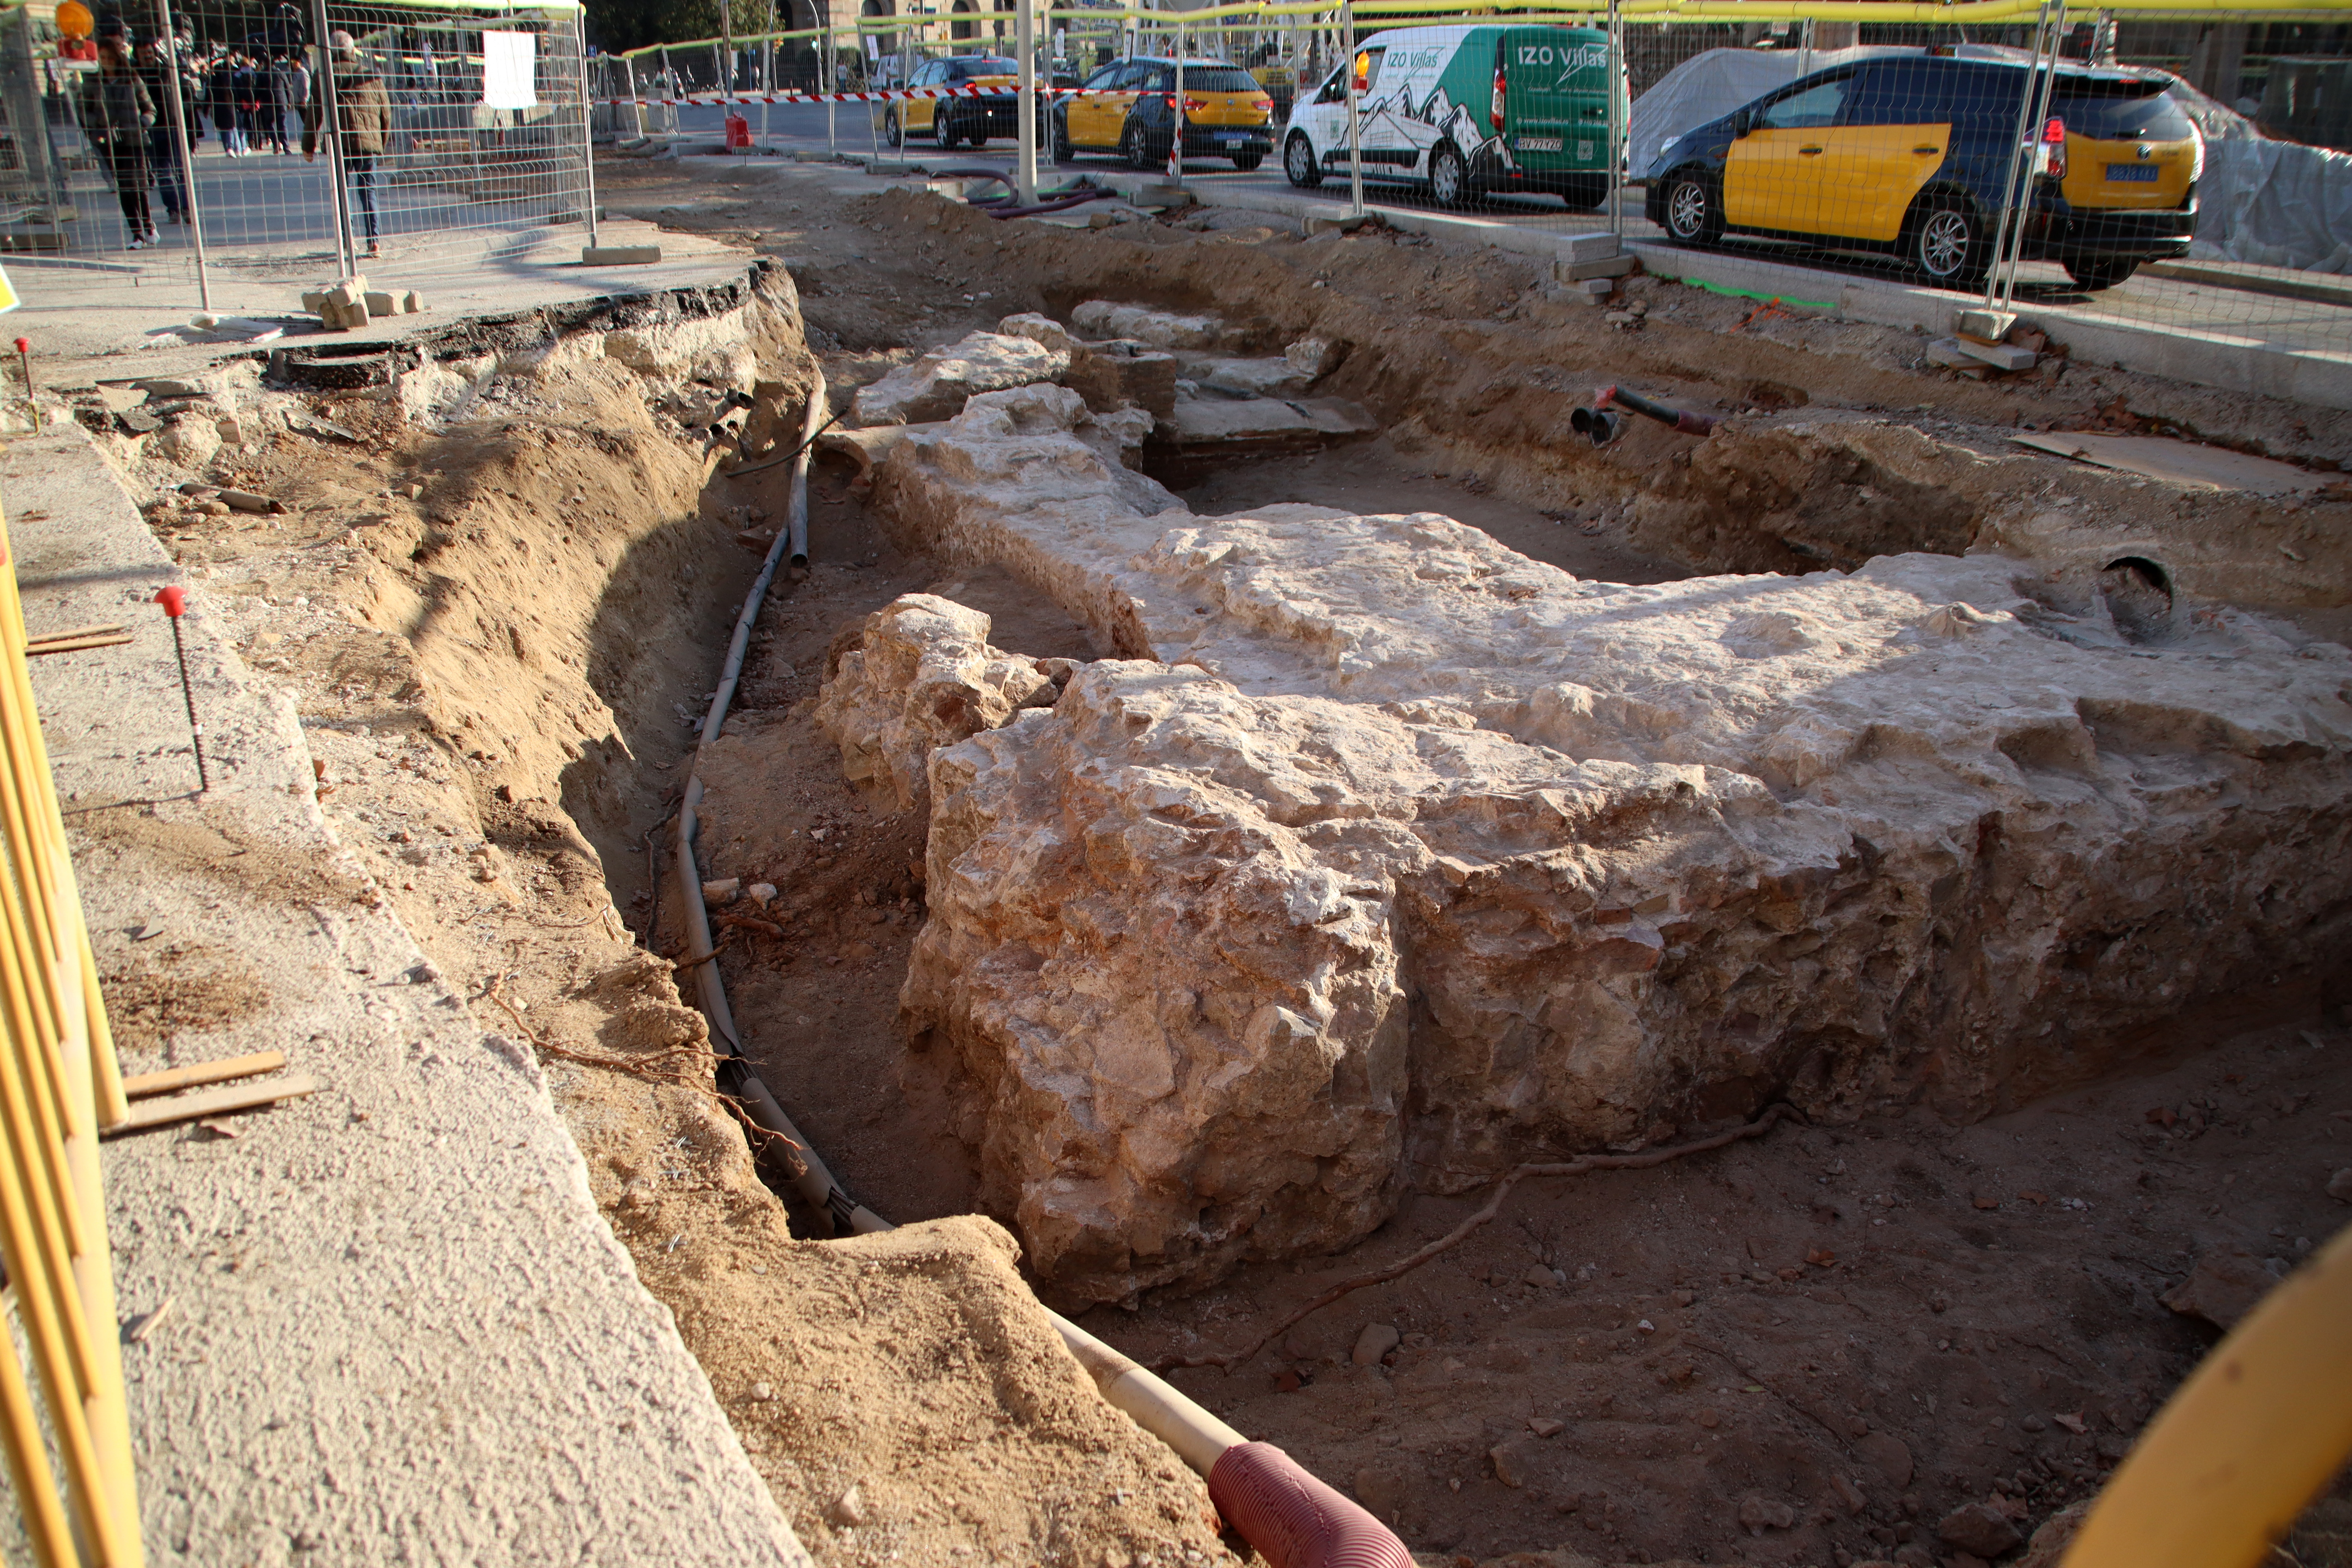 Bastion uncovered during La Rambla renovation